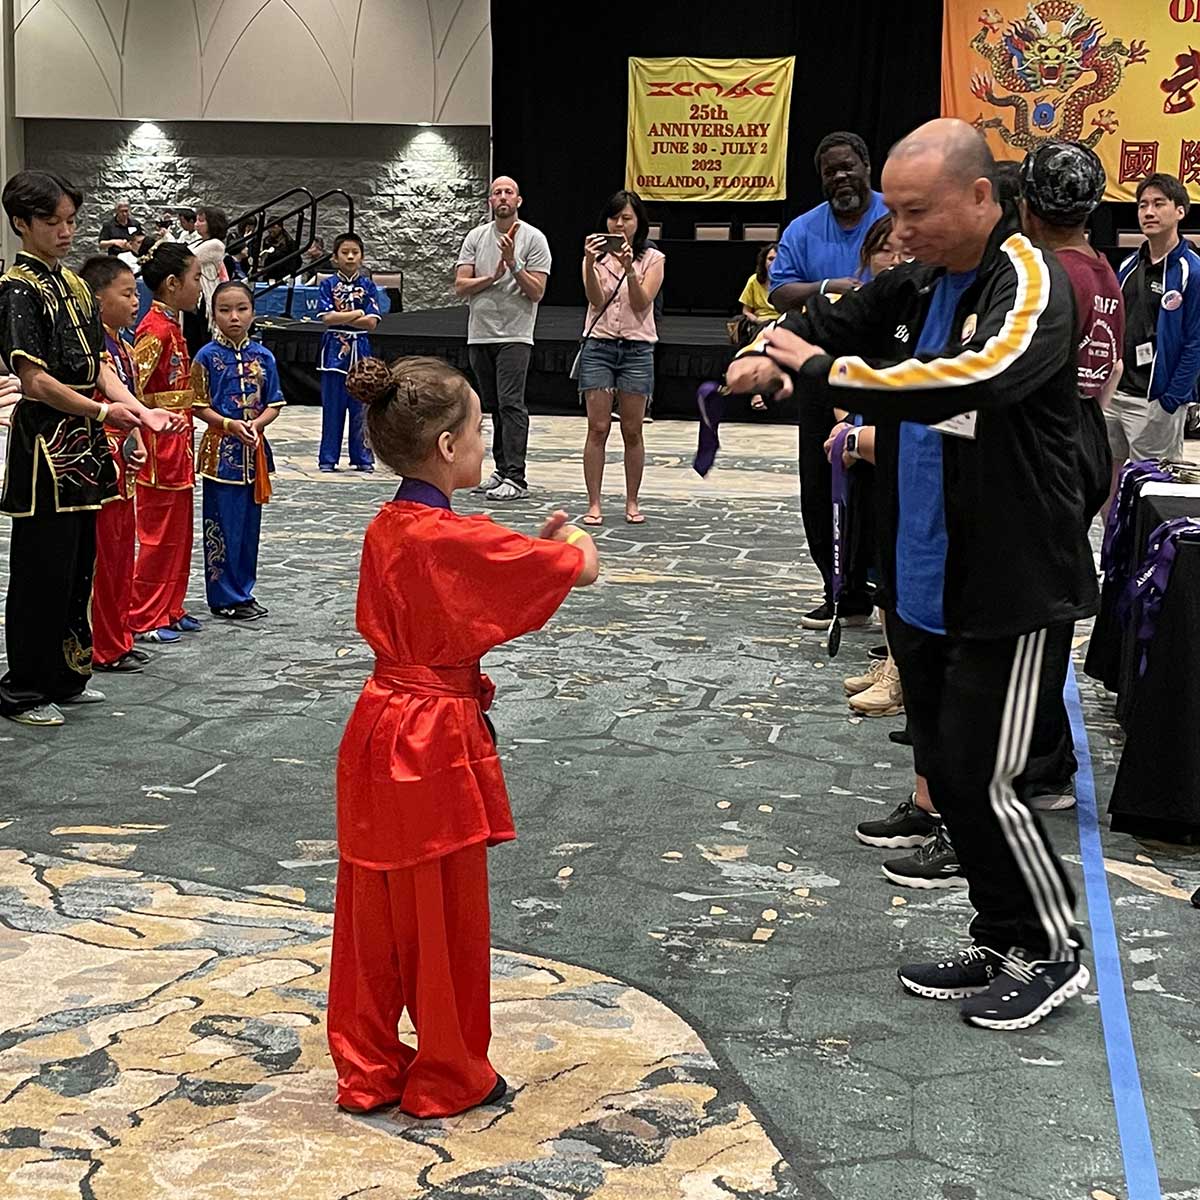 Sorina Codita, 25th International Chinese Martial Arts Championships, Orlando. Florida, July 1st, 2023